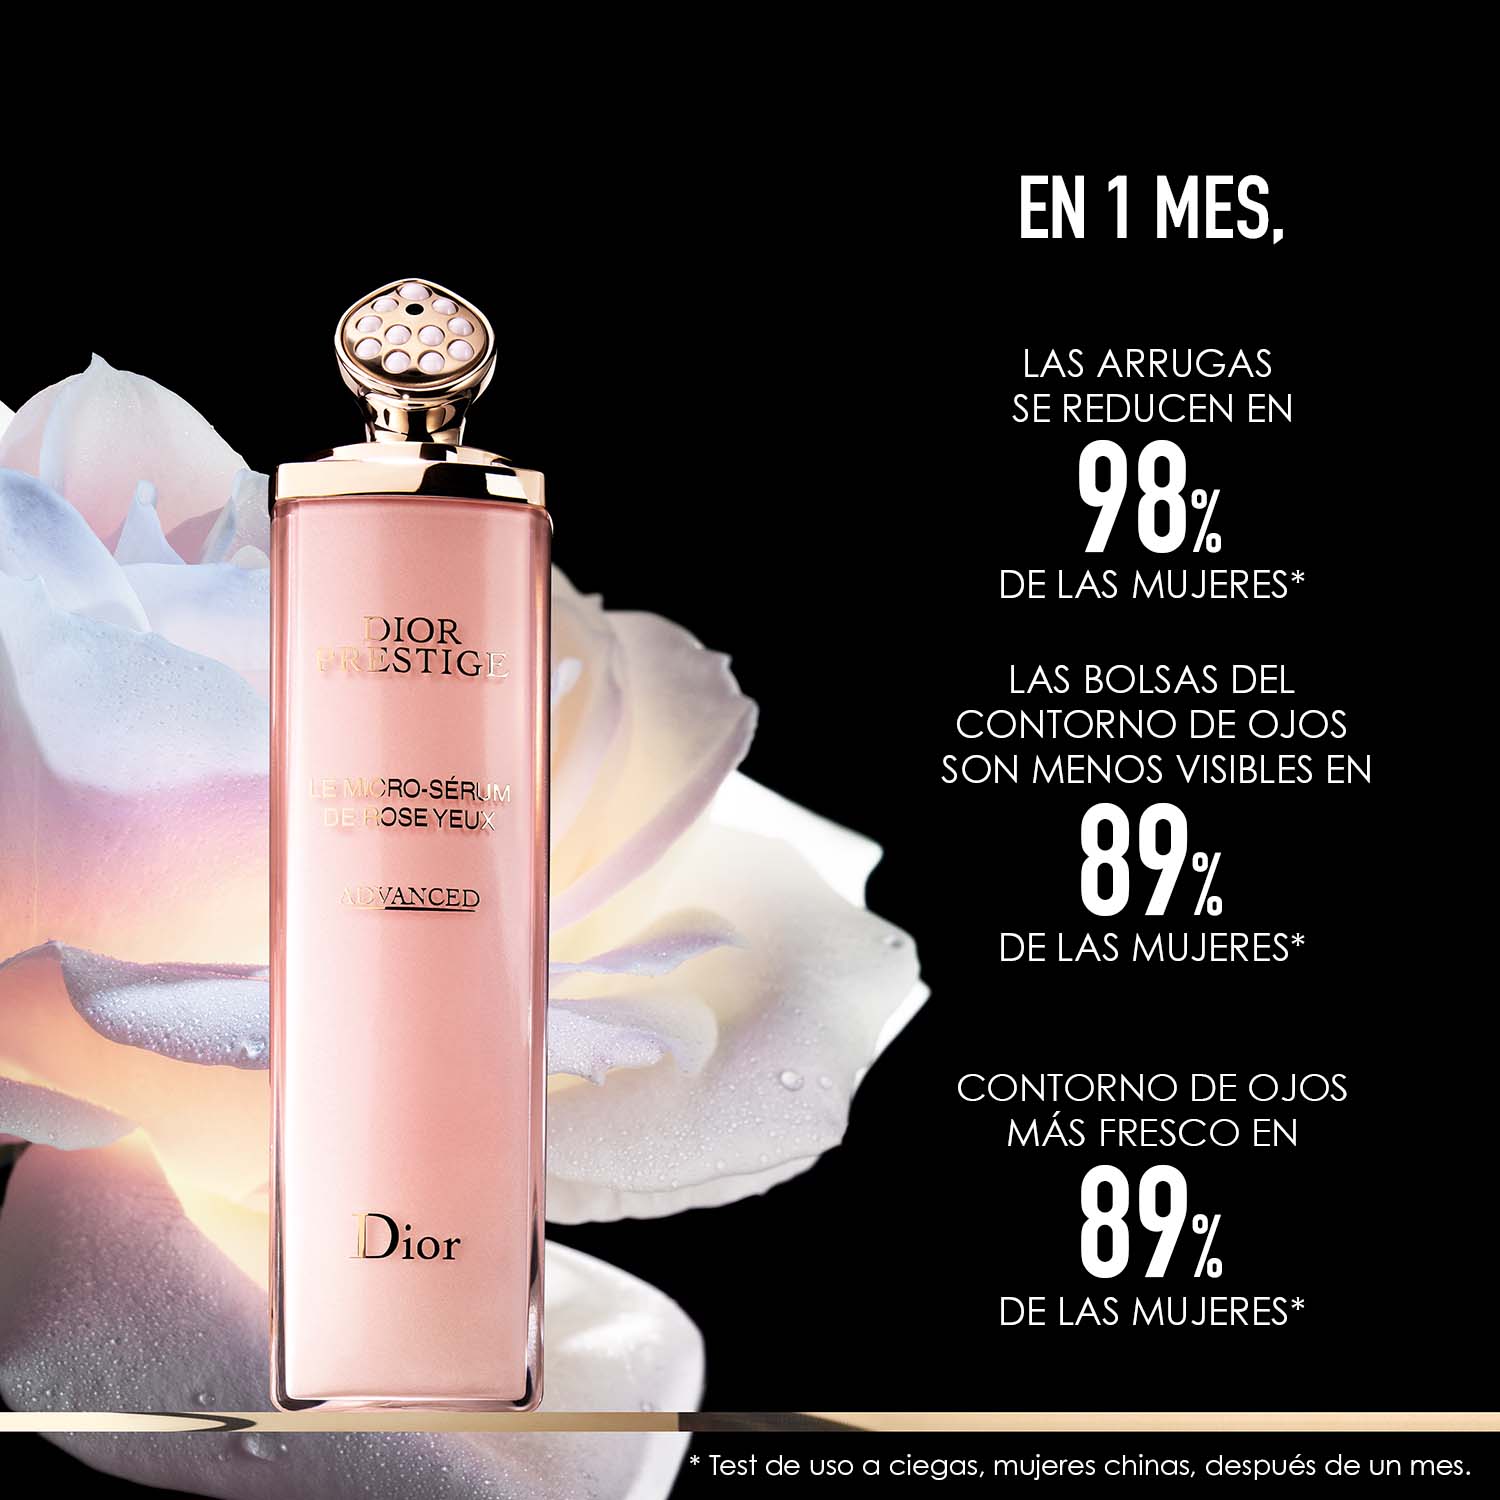 Dior Prestige Le Micro Serum De Rose Yeux